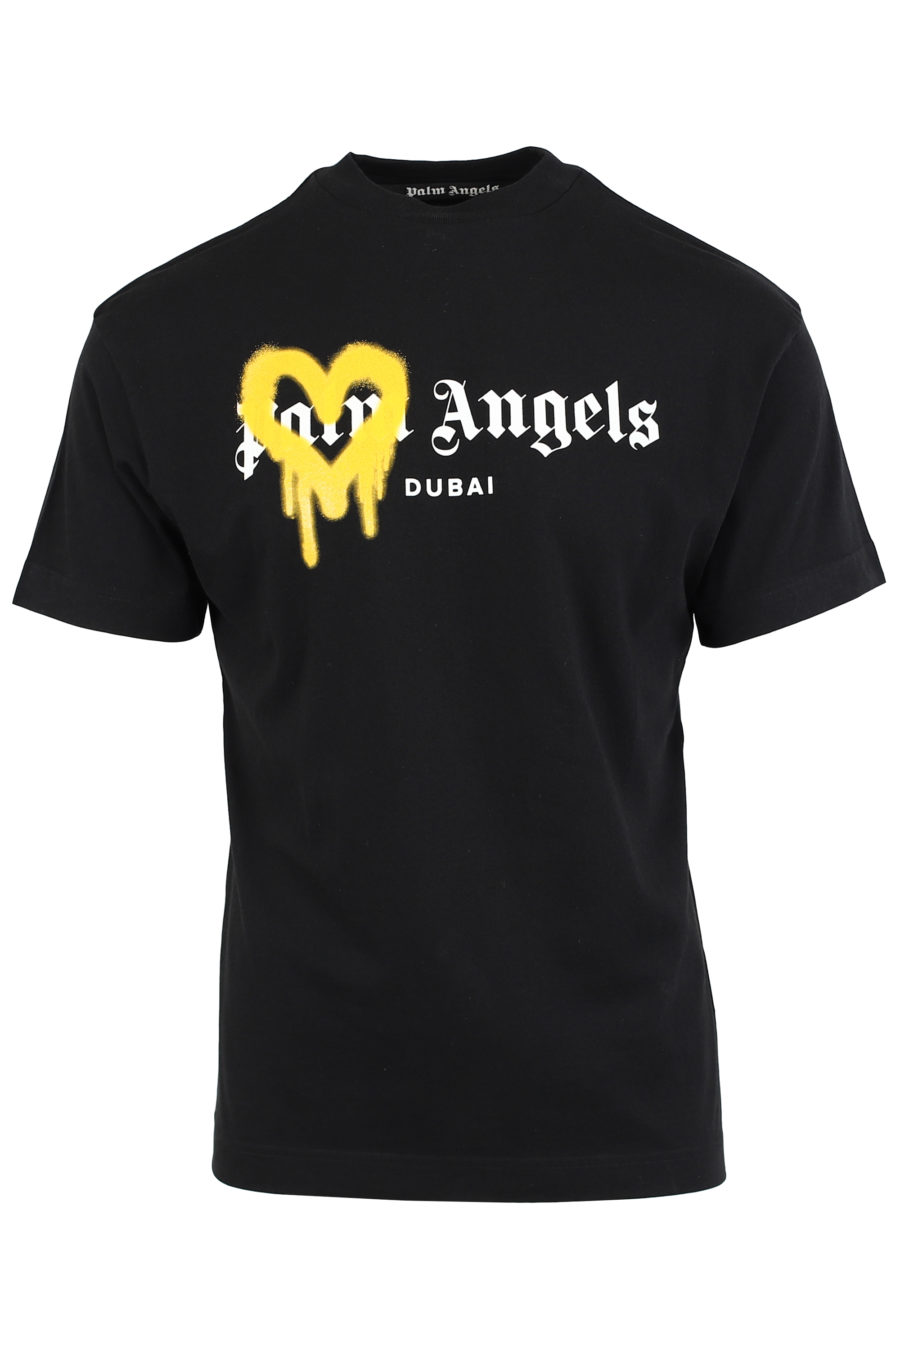 Camiseta negra con logotipo Dubai - IMG 0954